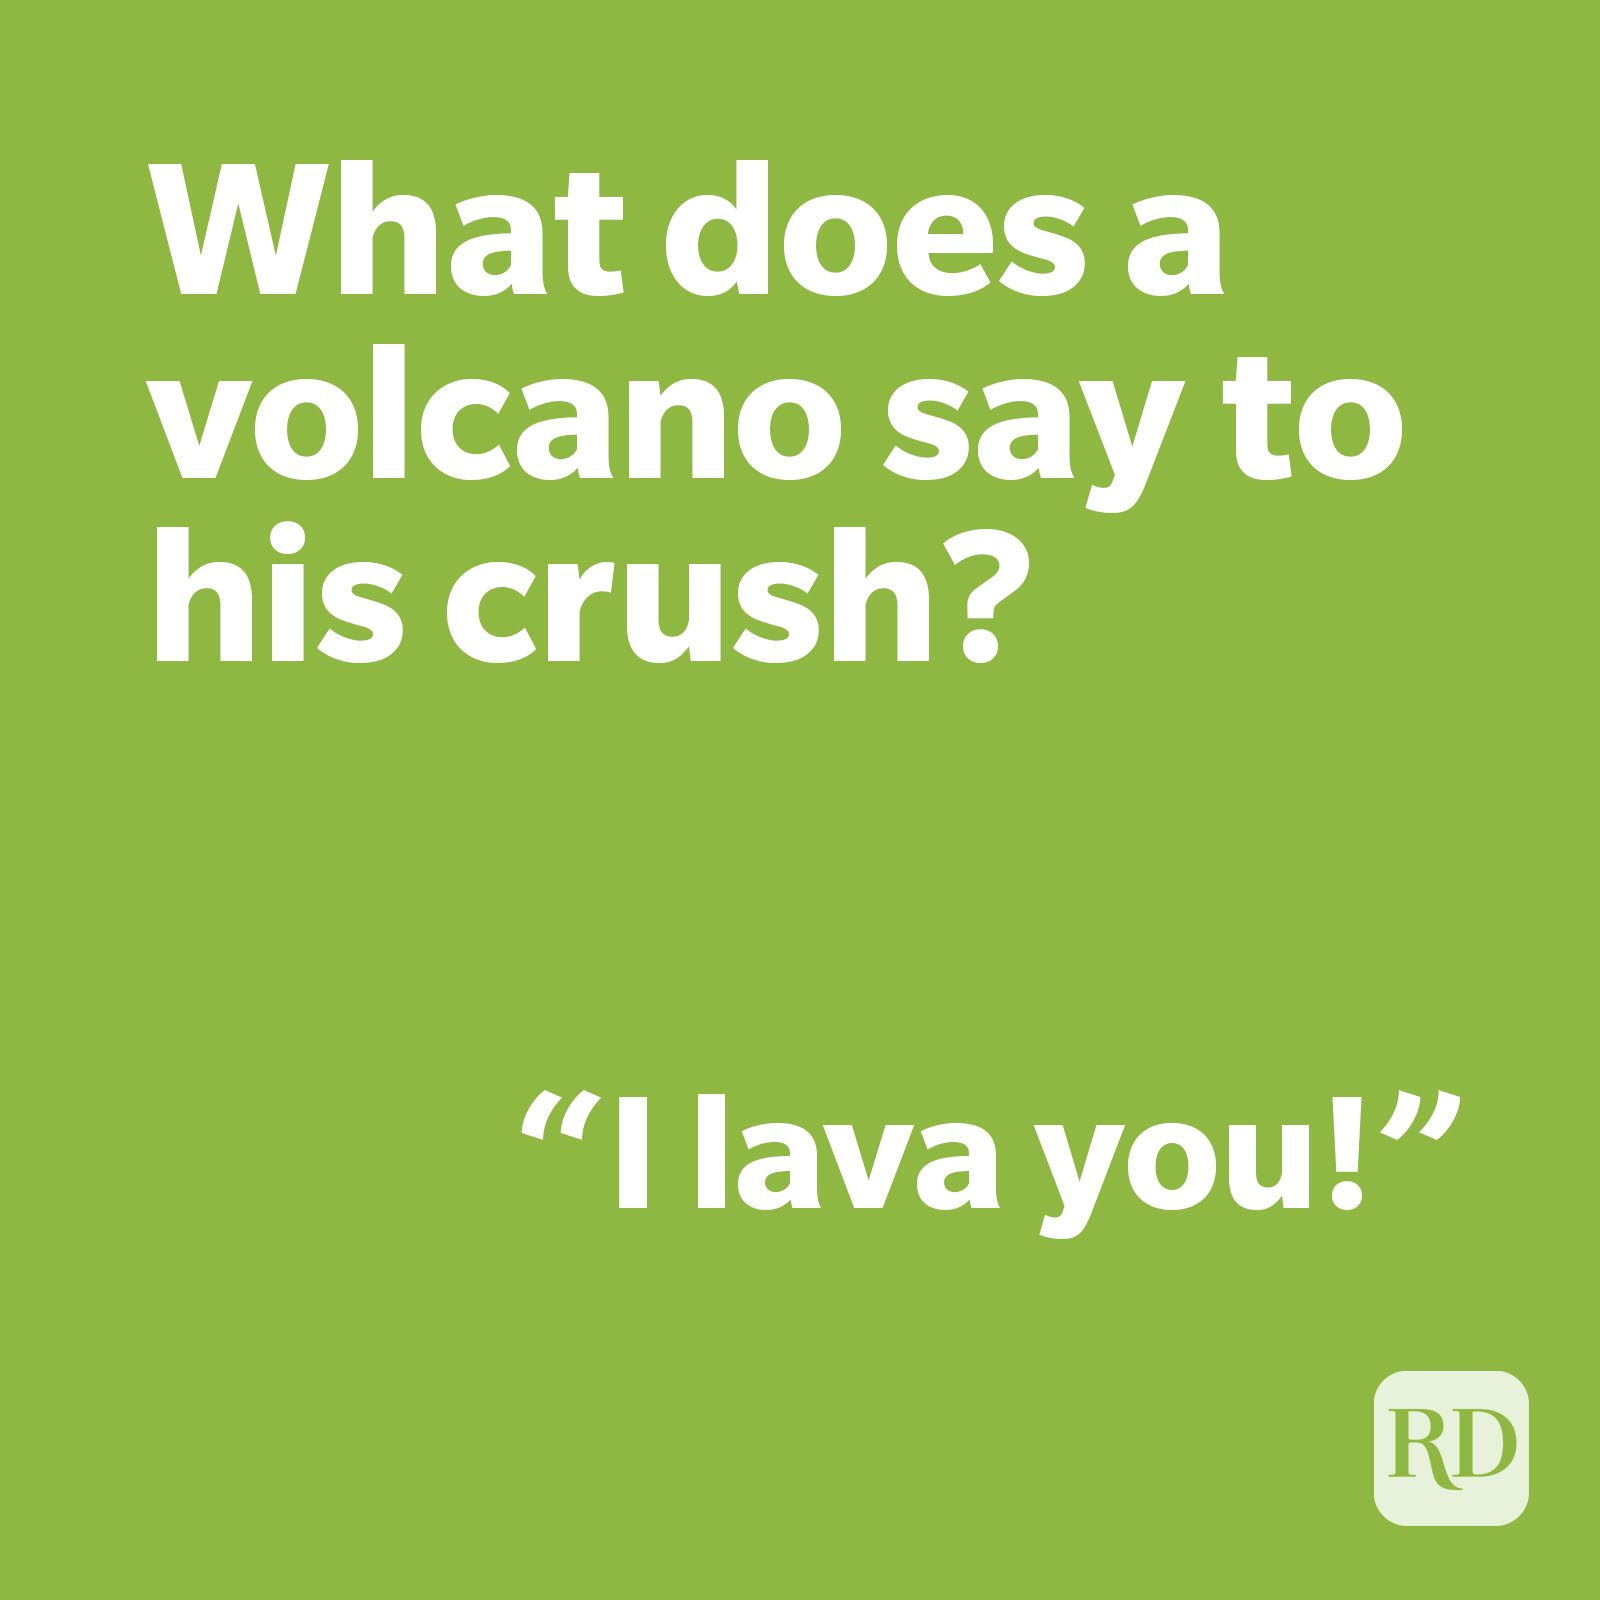 Volcano joke